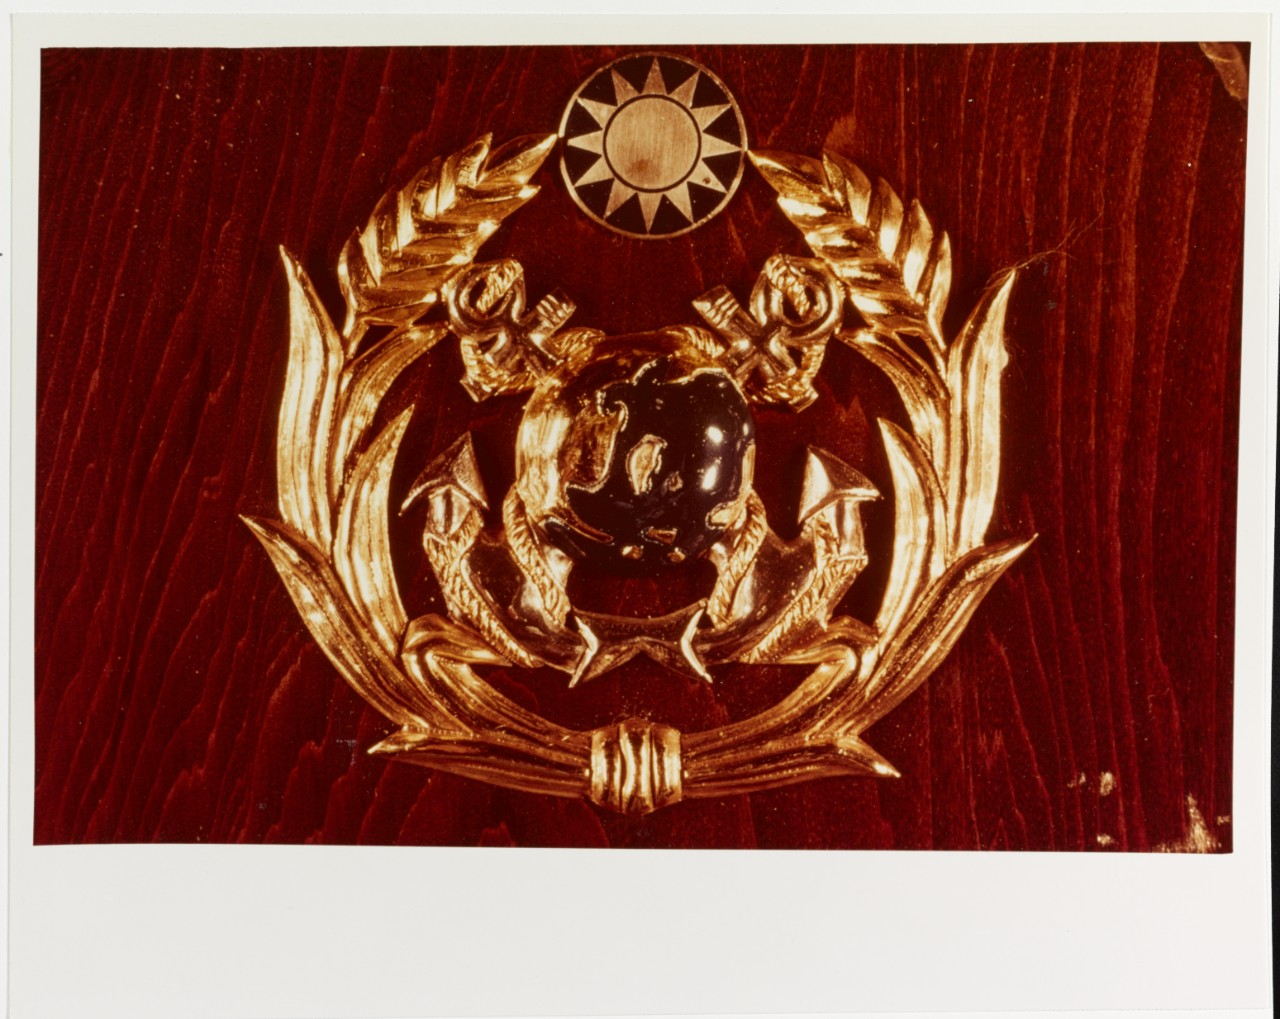 Insignia: Republic of China Navy (Taiwan)